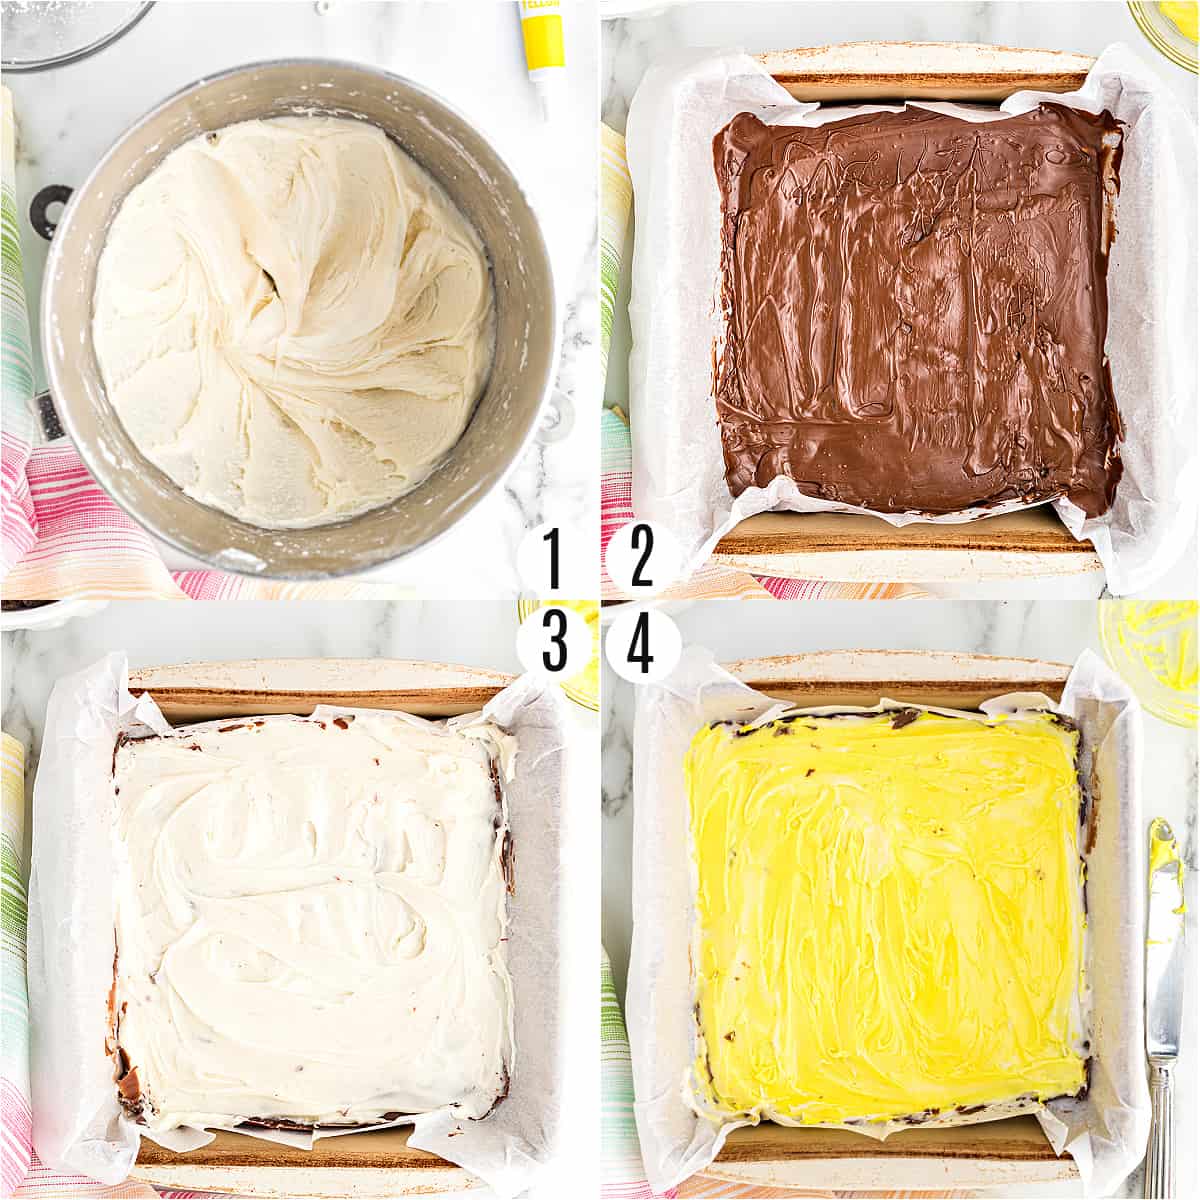 Step by step photos showing how to make cadbury egg fudge.